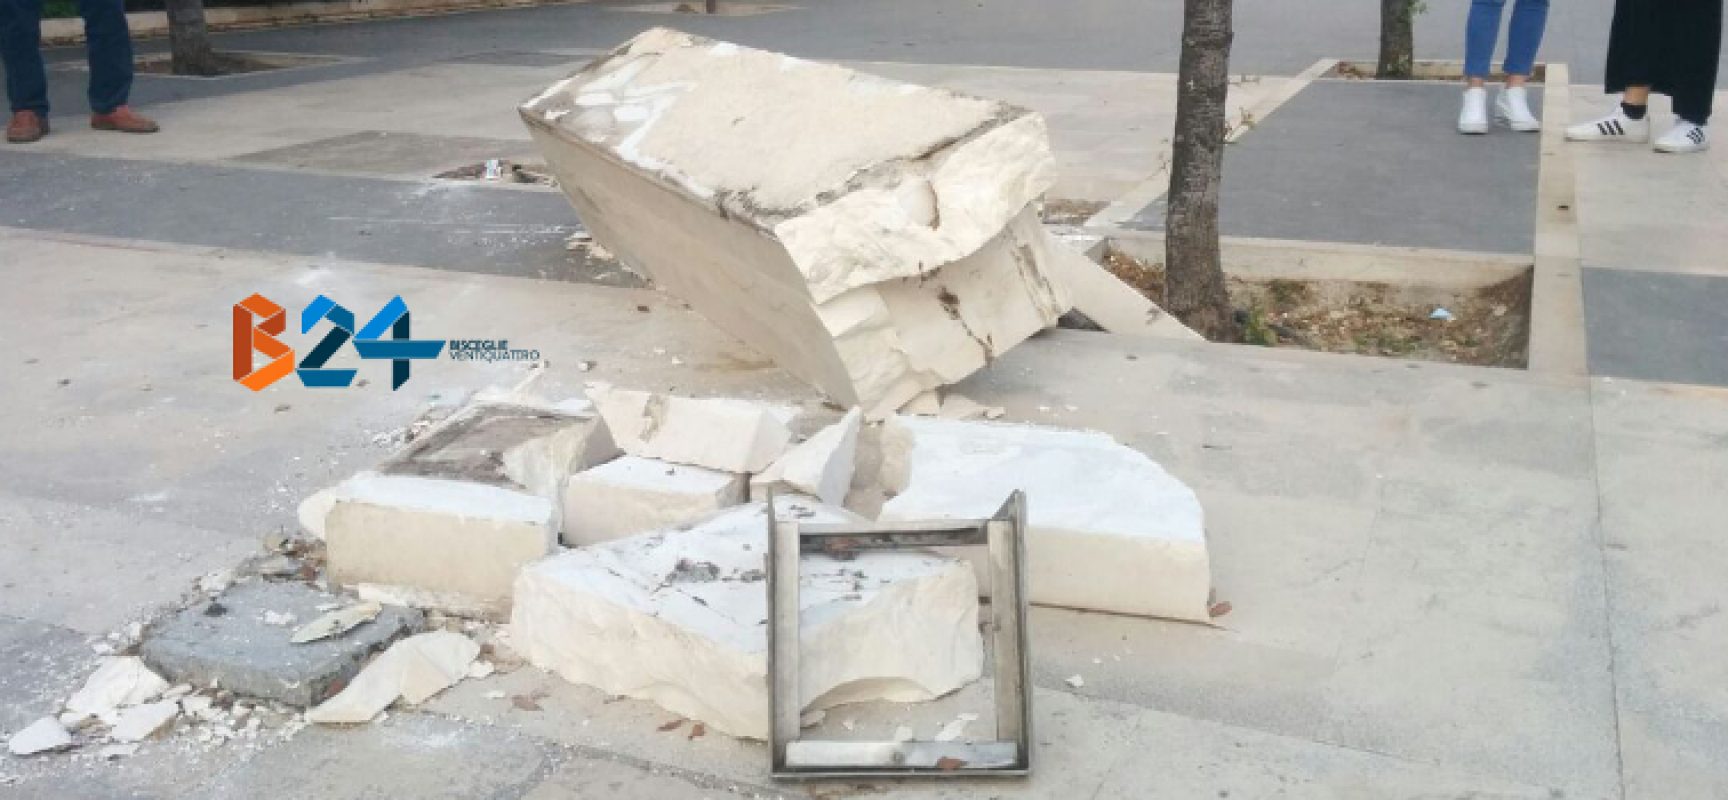 Divelta panchina di pietra in villa, indaga la polizia municipale / FOTO